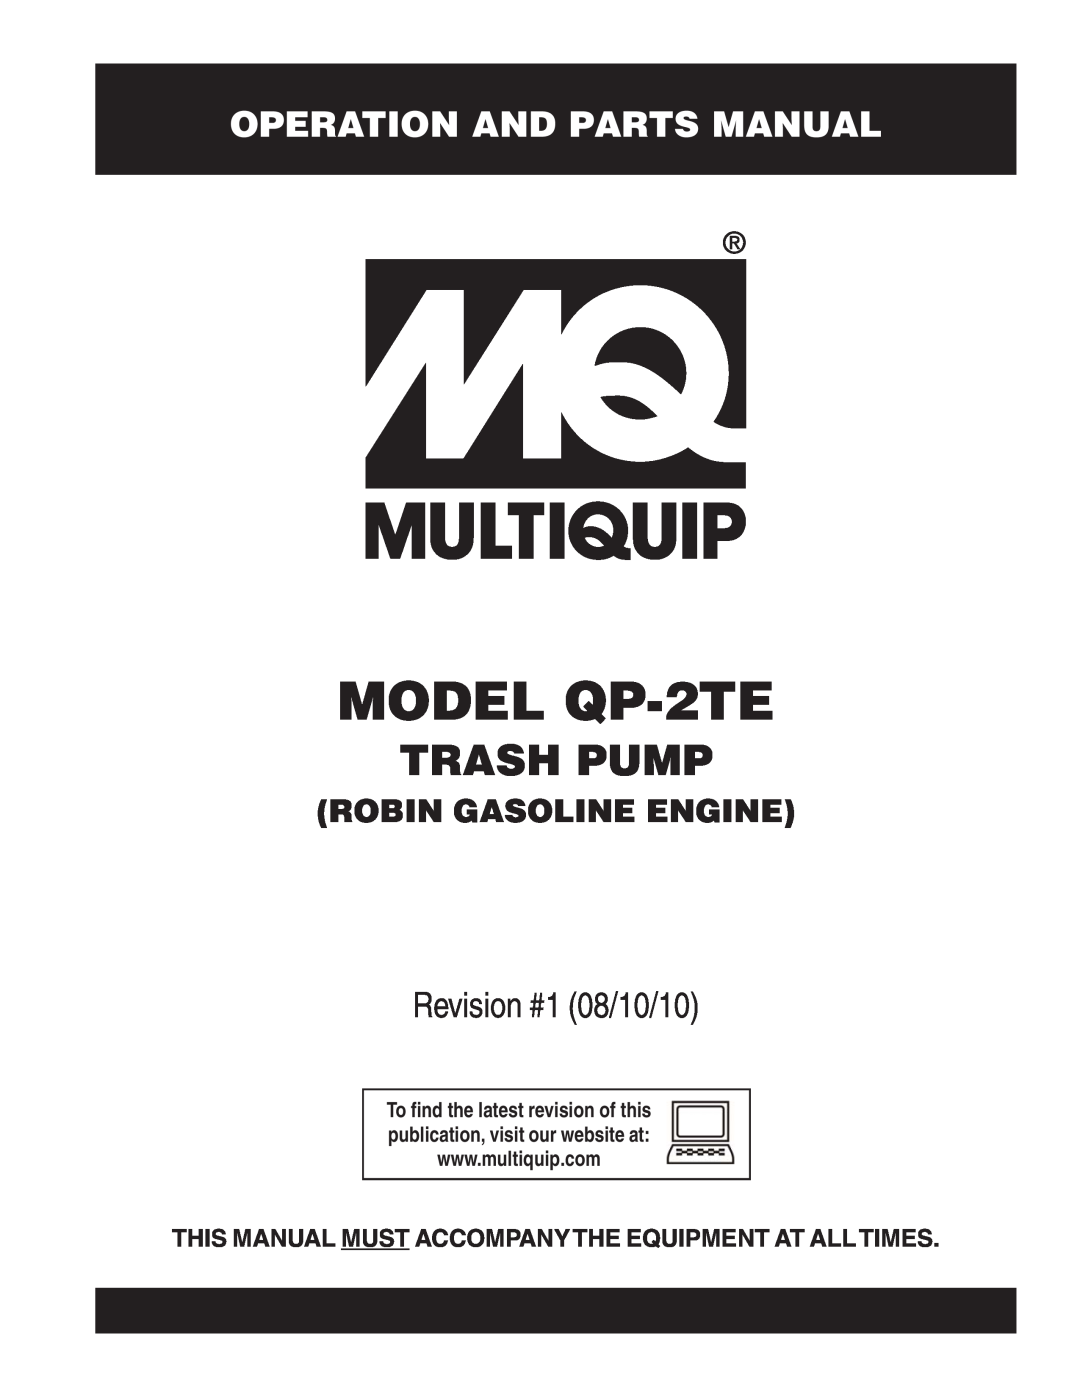 Multiquip Qp-2TE manual Operation And Parts Manual, MODEL QP-2TE, Trash Pump, Revision #1 08/10/10, Robin Gasoline Engine 